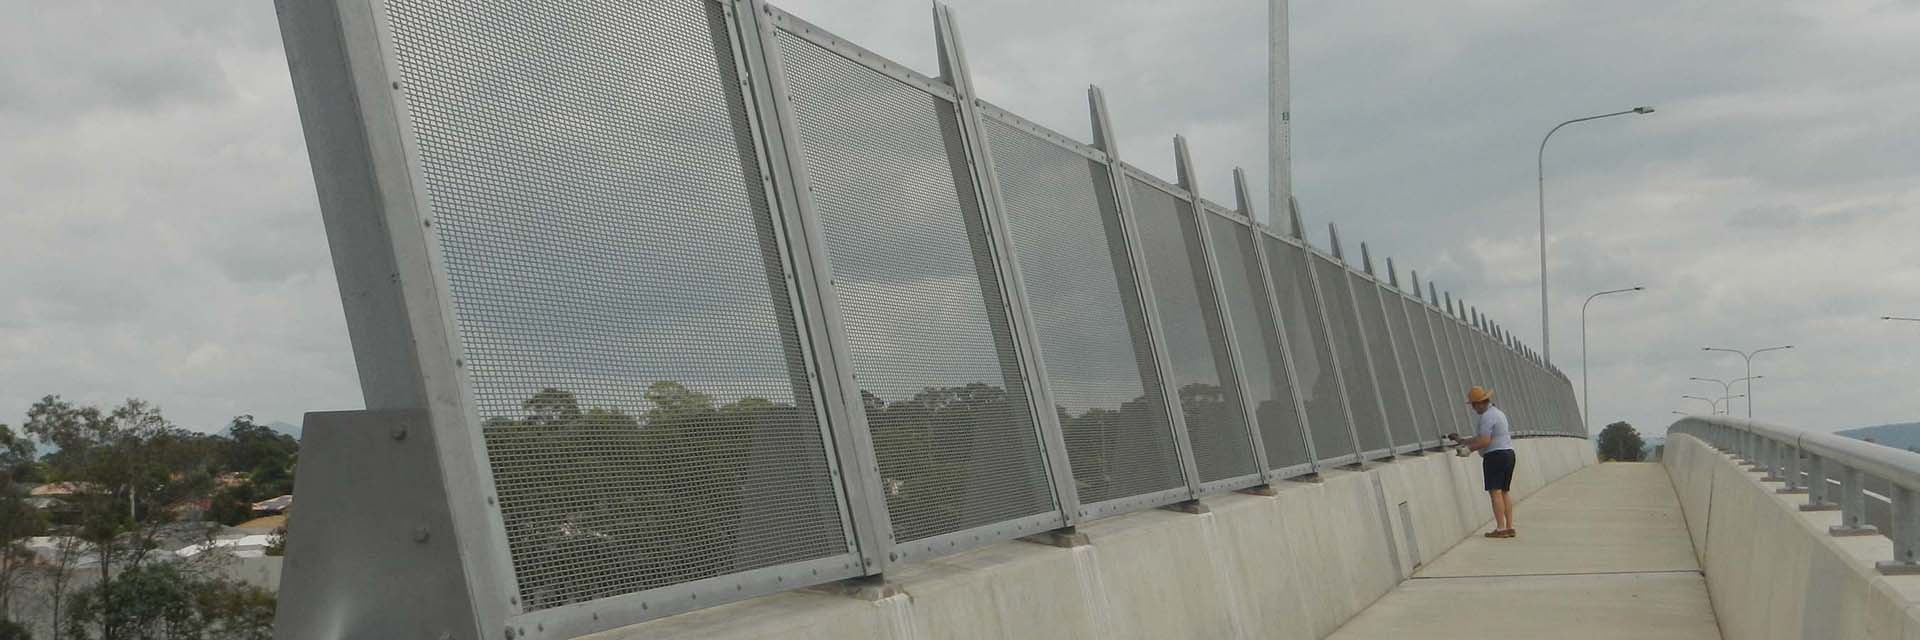 Steel Anti-Throw Screens, Bike Safety Rail, Lampstand Brackets, bearing Restraint angles & Plates – Plantation Rd Bridge, Dakabin.